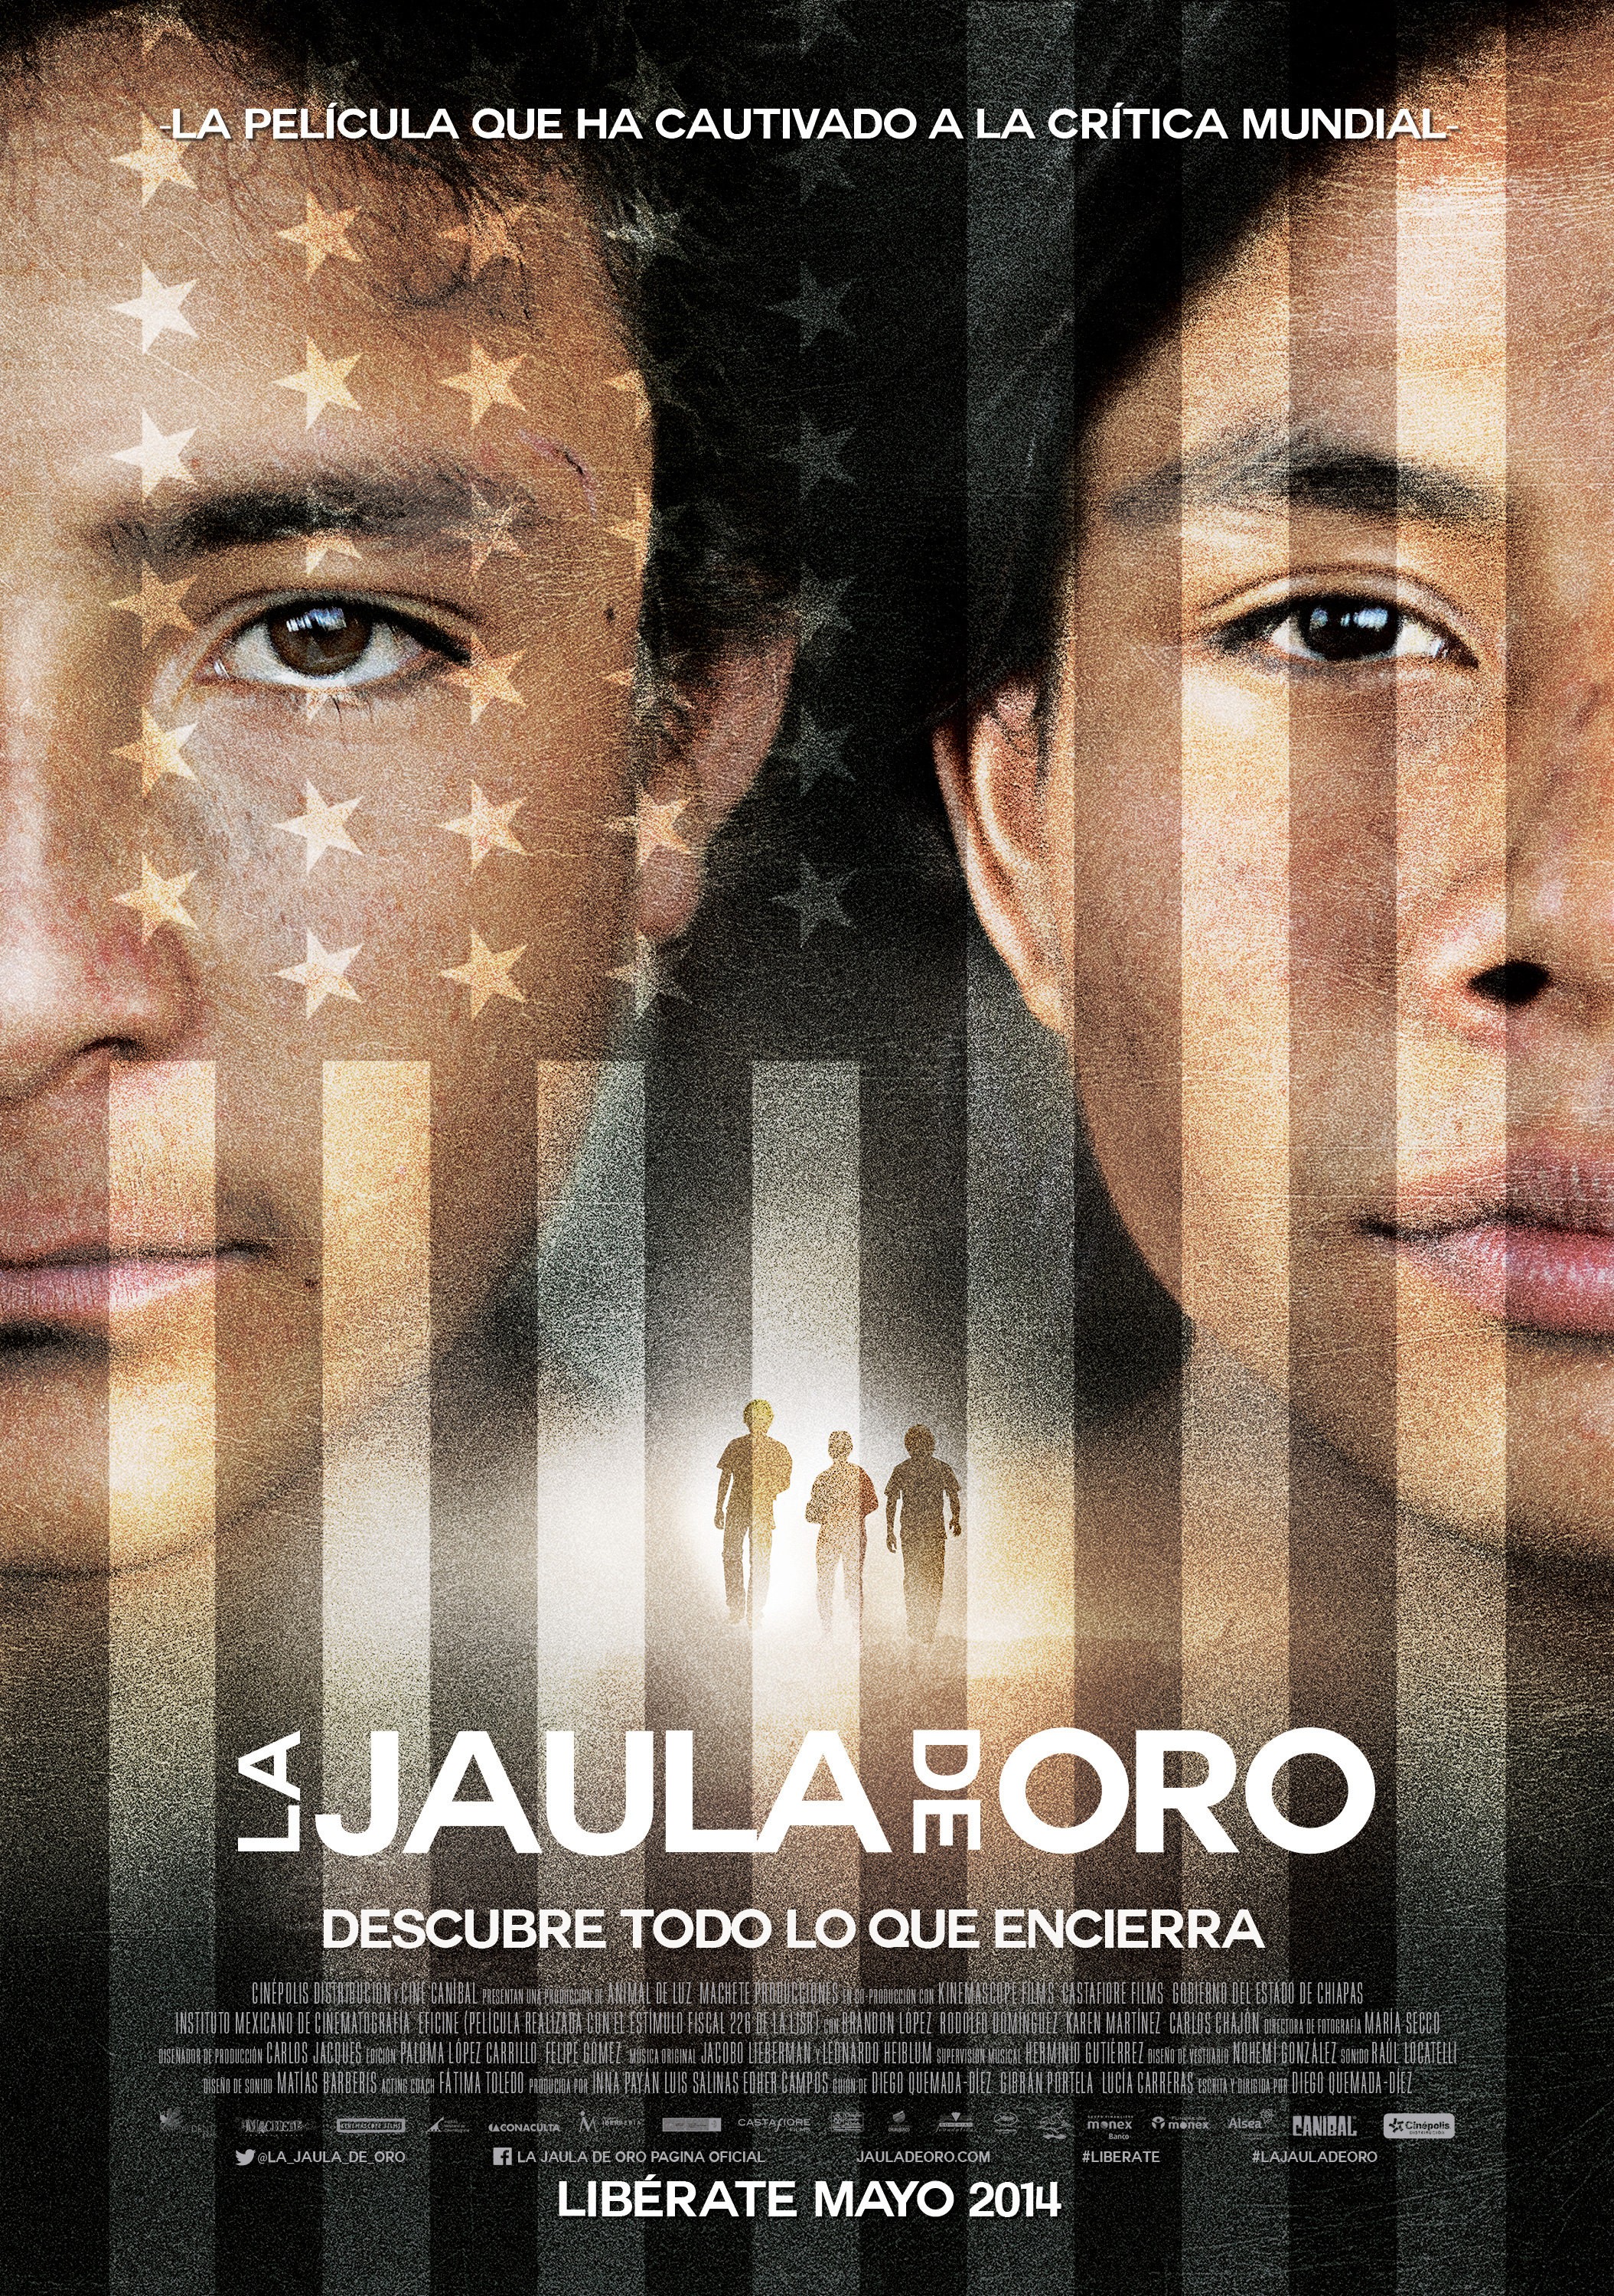 Mega Sized Movie Poster Image for La jaula de oro (#5 of 8)